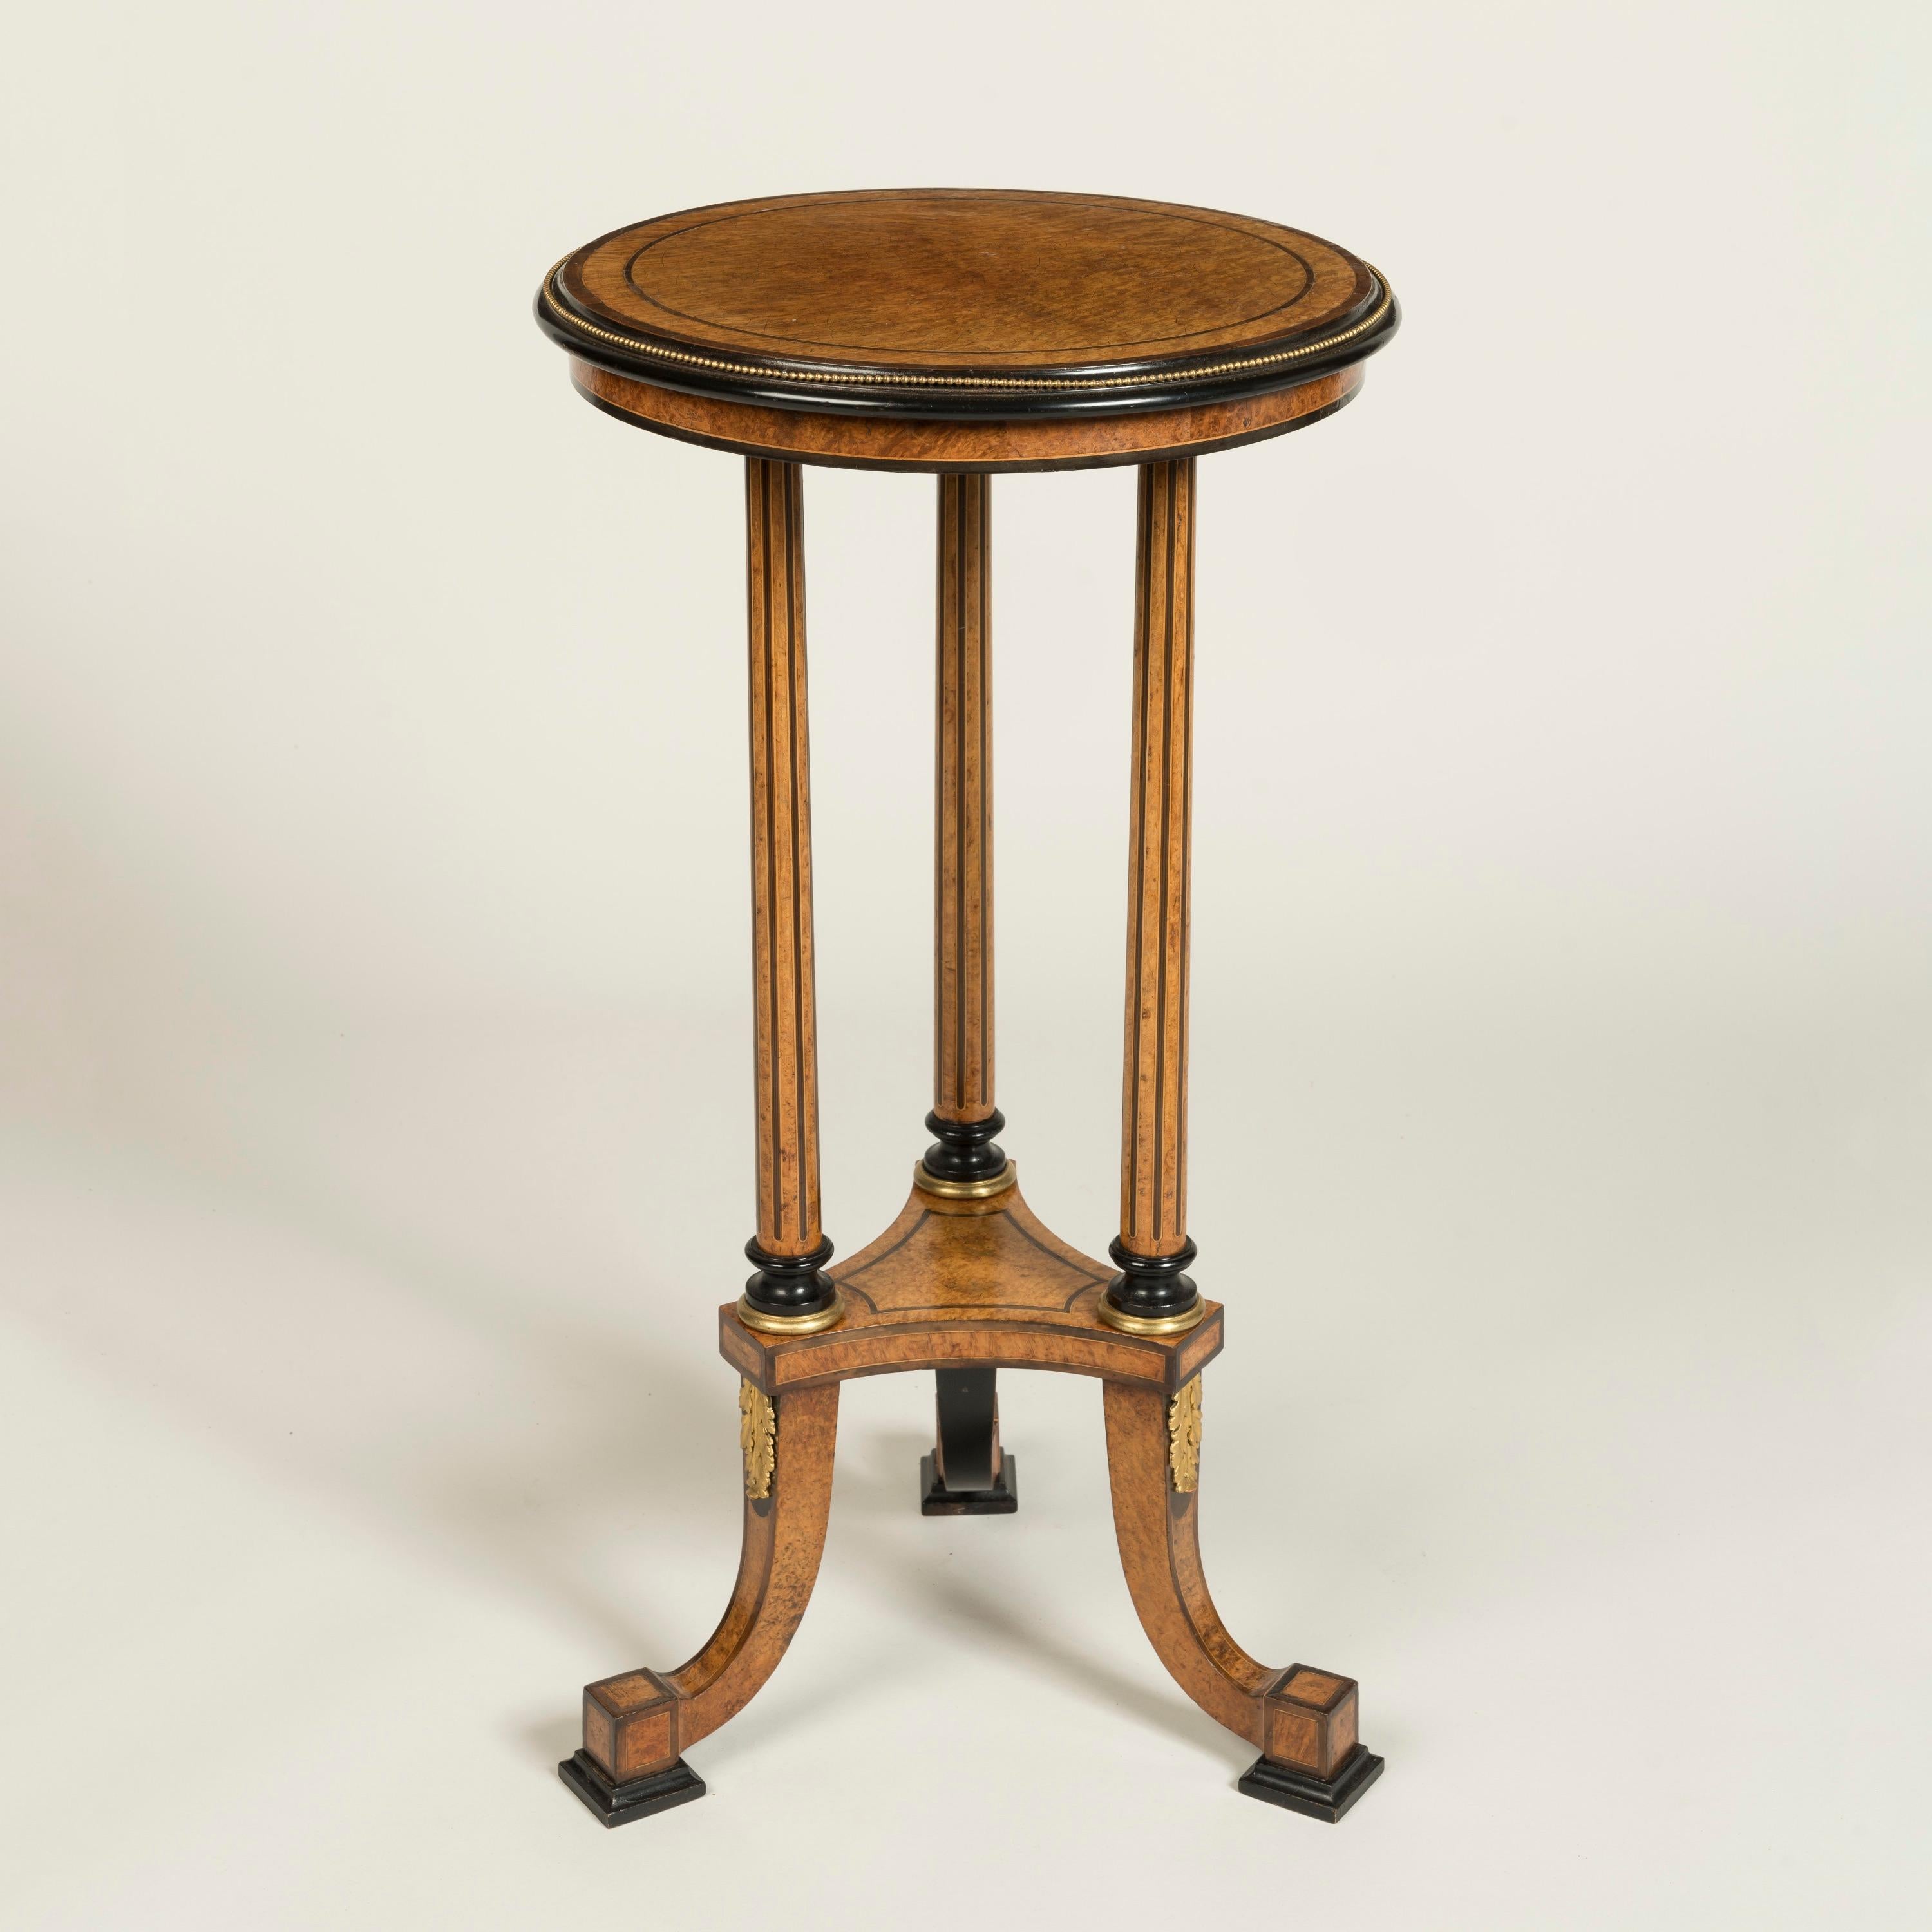 Ormolu 19th Century English Burr Walnut Tripod Table by Gregory & Co of London For Sale